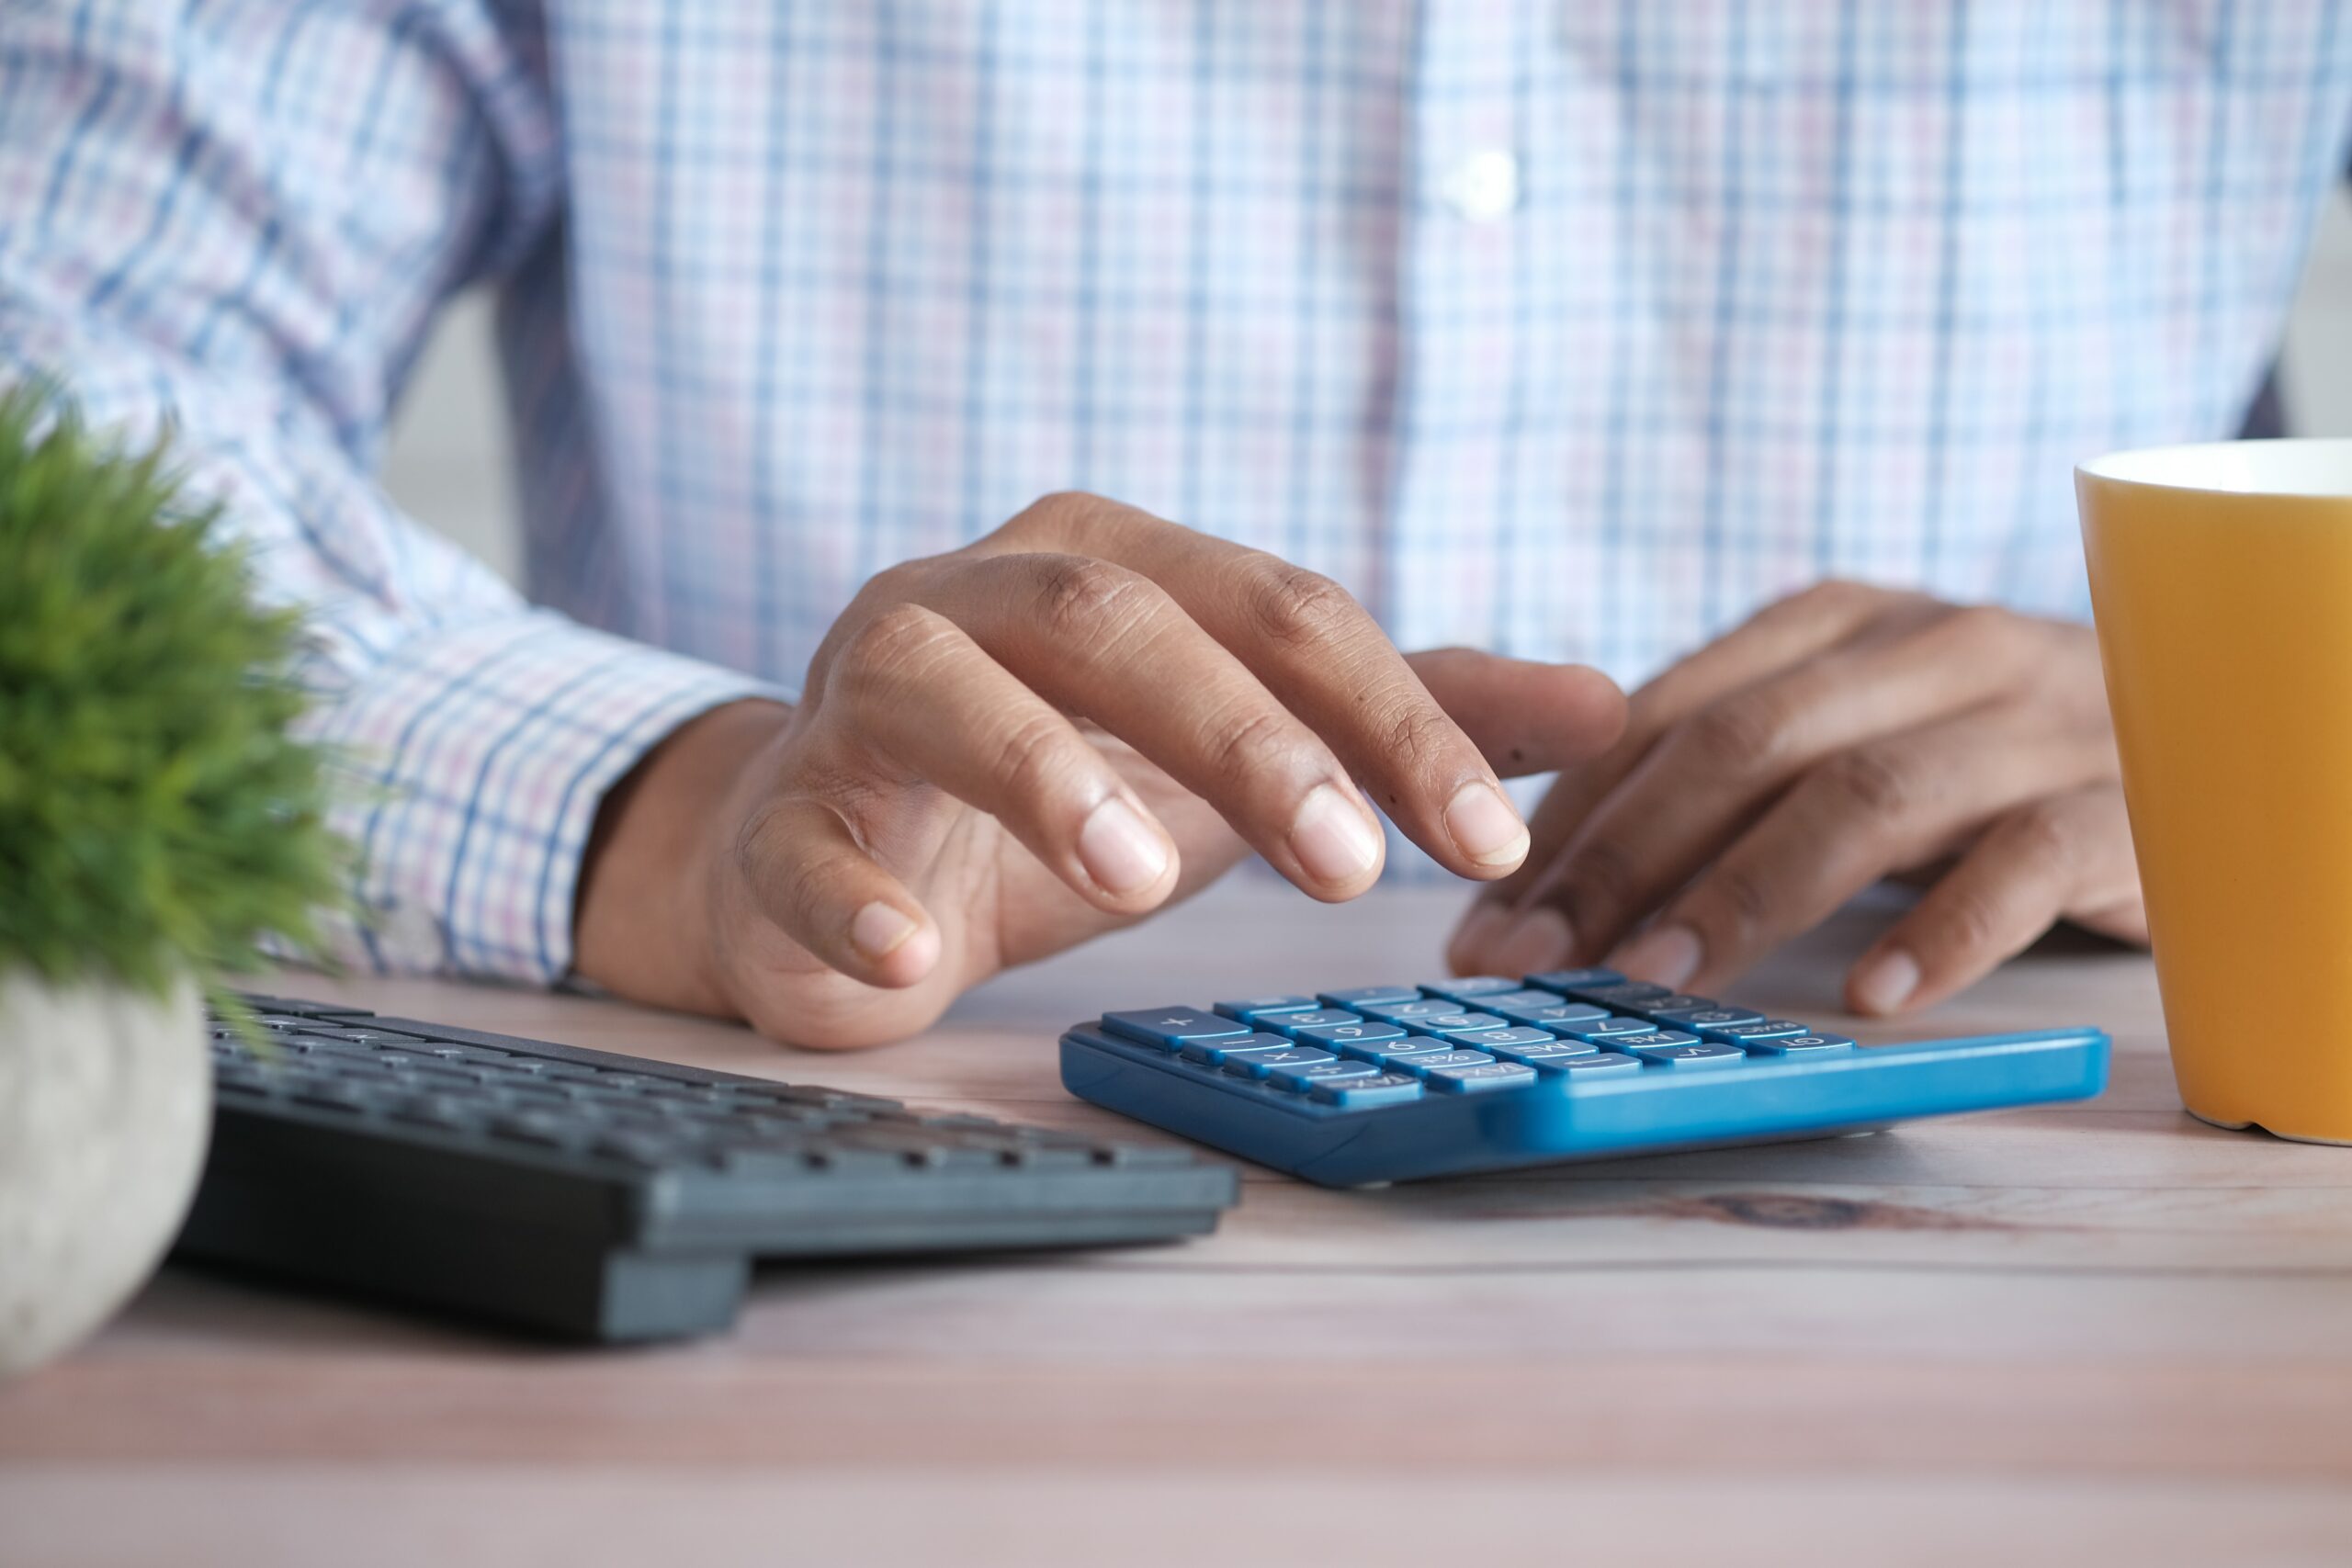 A man punching keys on a calculator next to a keyboard.